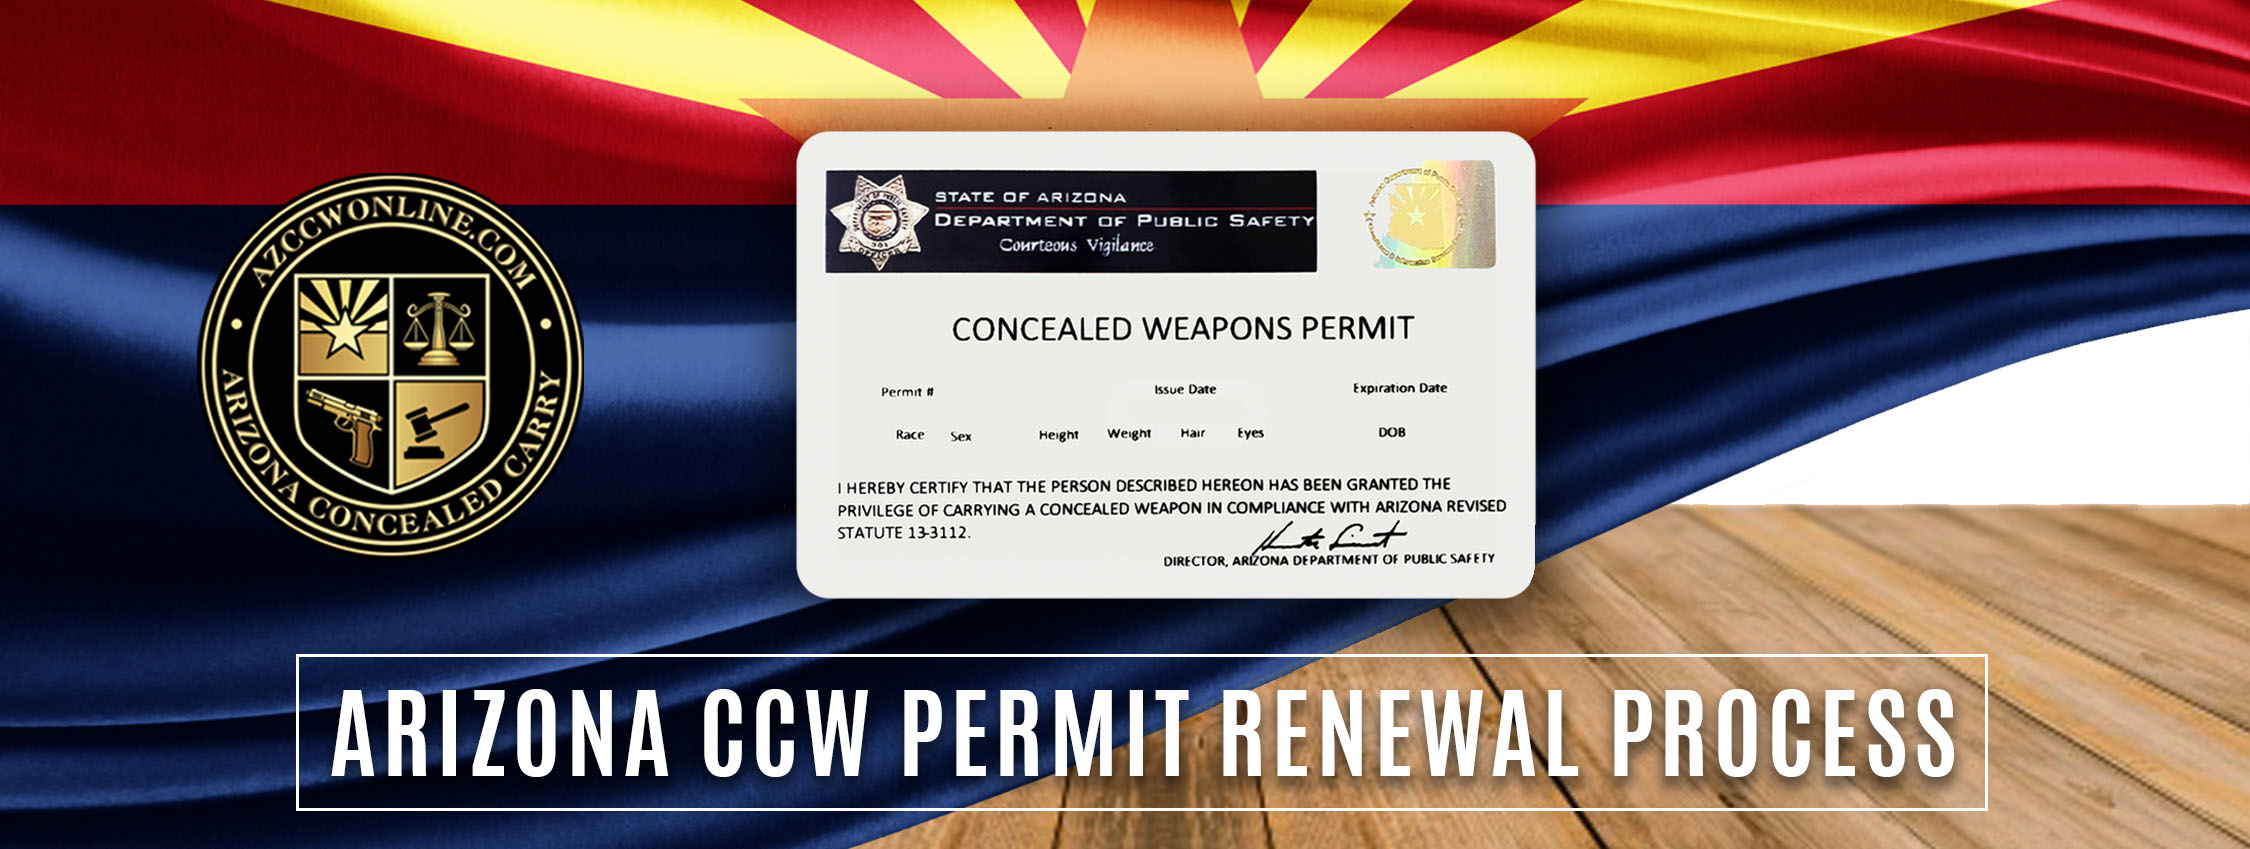 Arizona CCW Permit Renewal Application | CCW Renewal Course